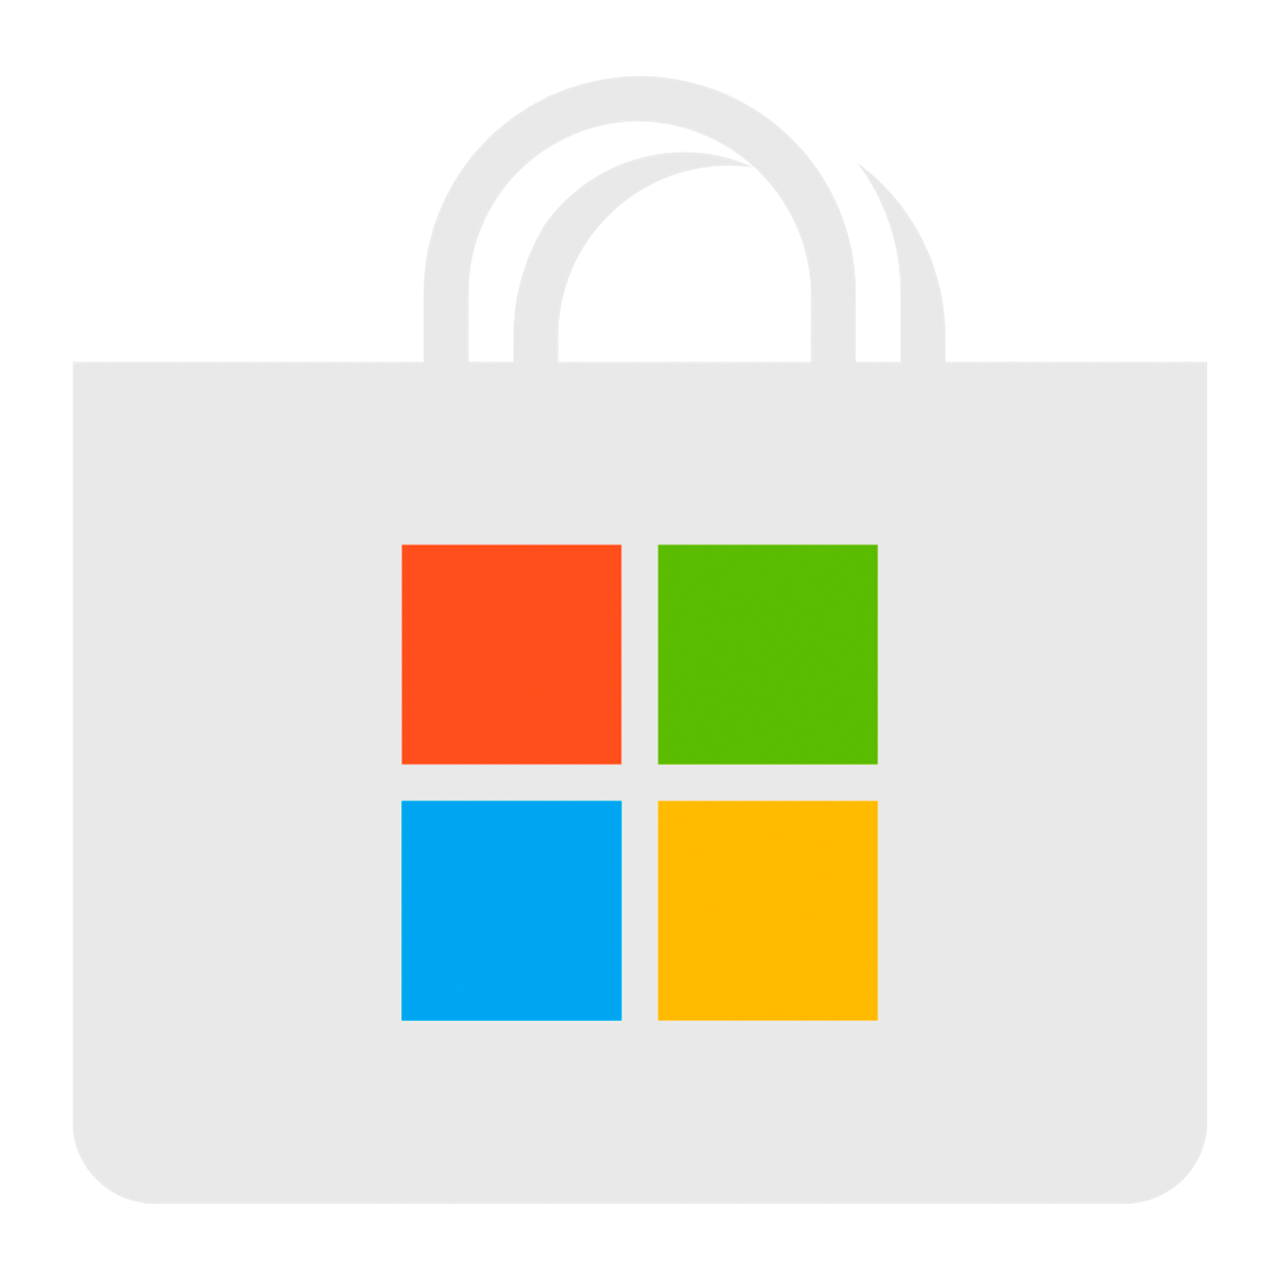 Microsoft Store logo. Майкрософт стор. Microsoft Store icon. Значок магазина Windows.